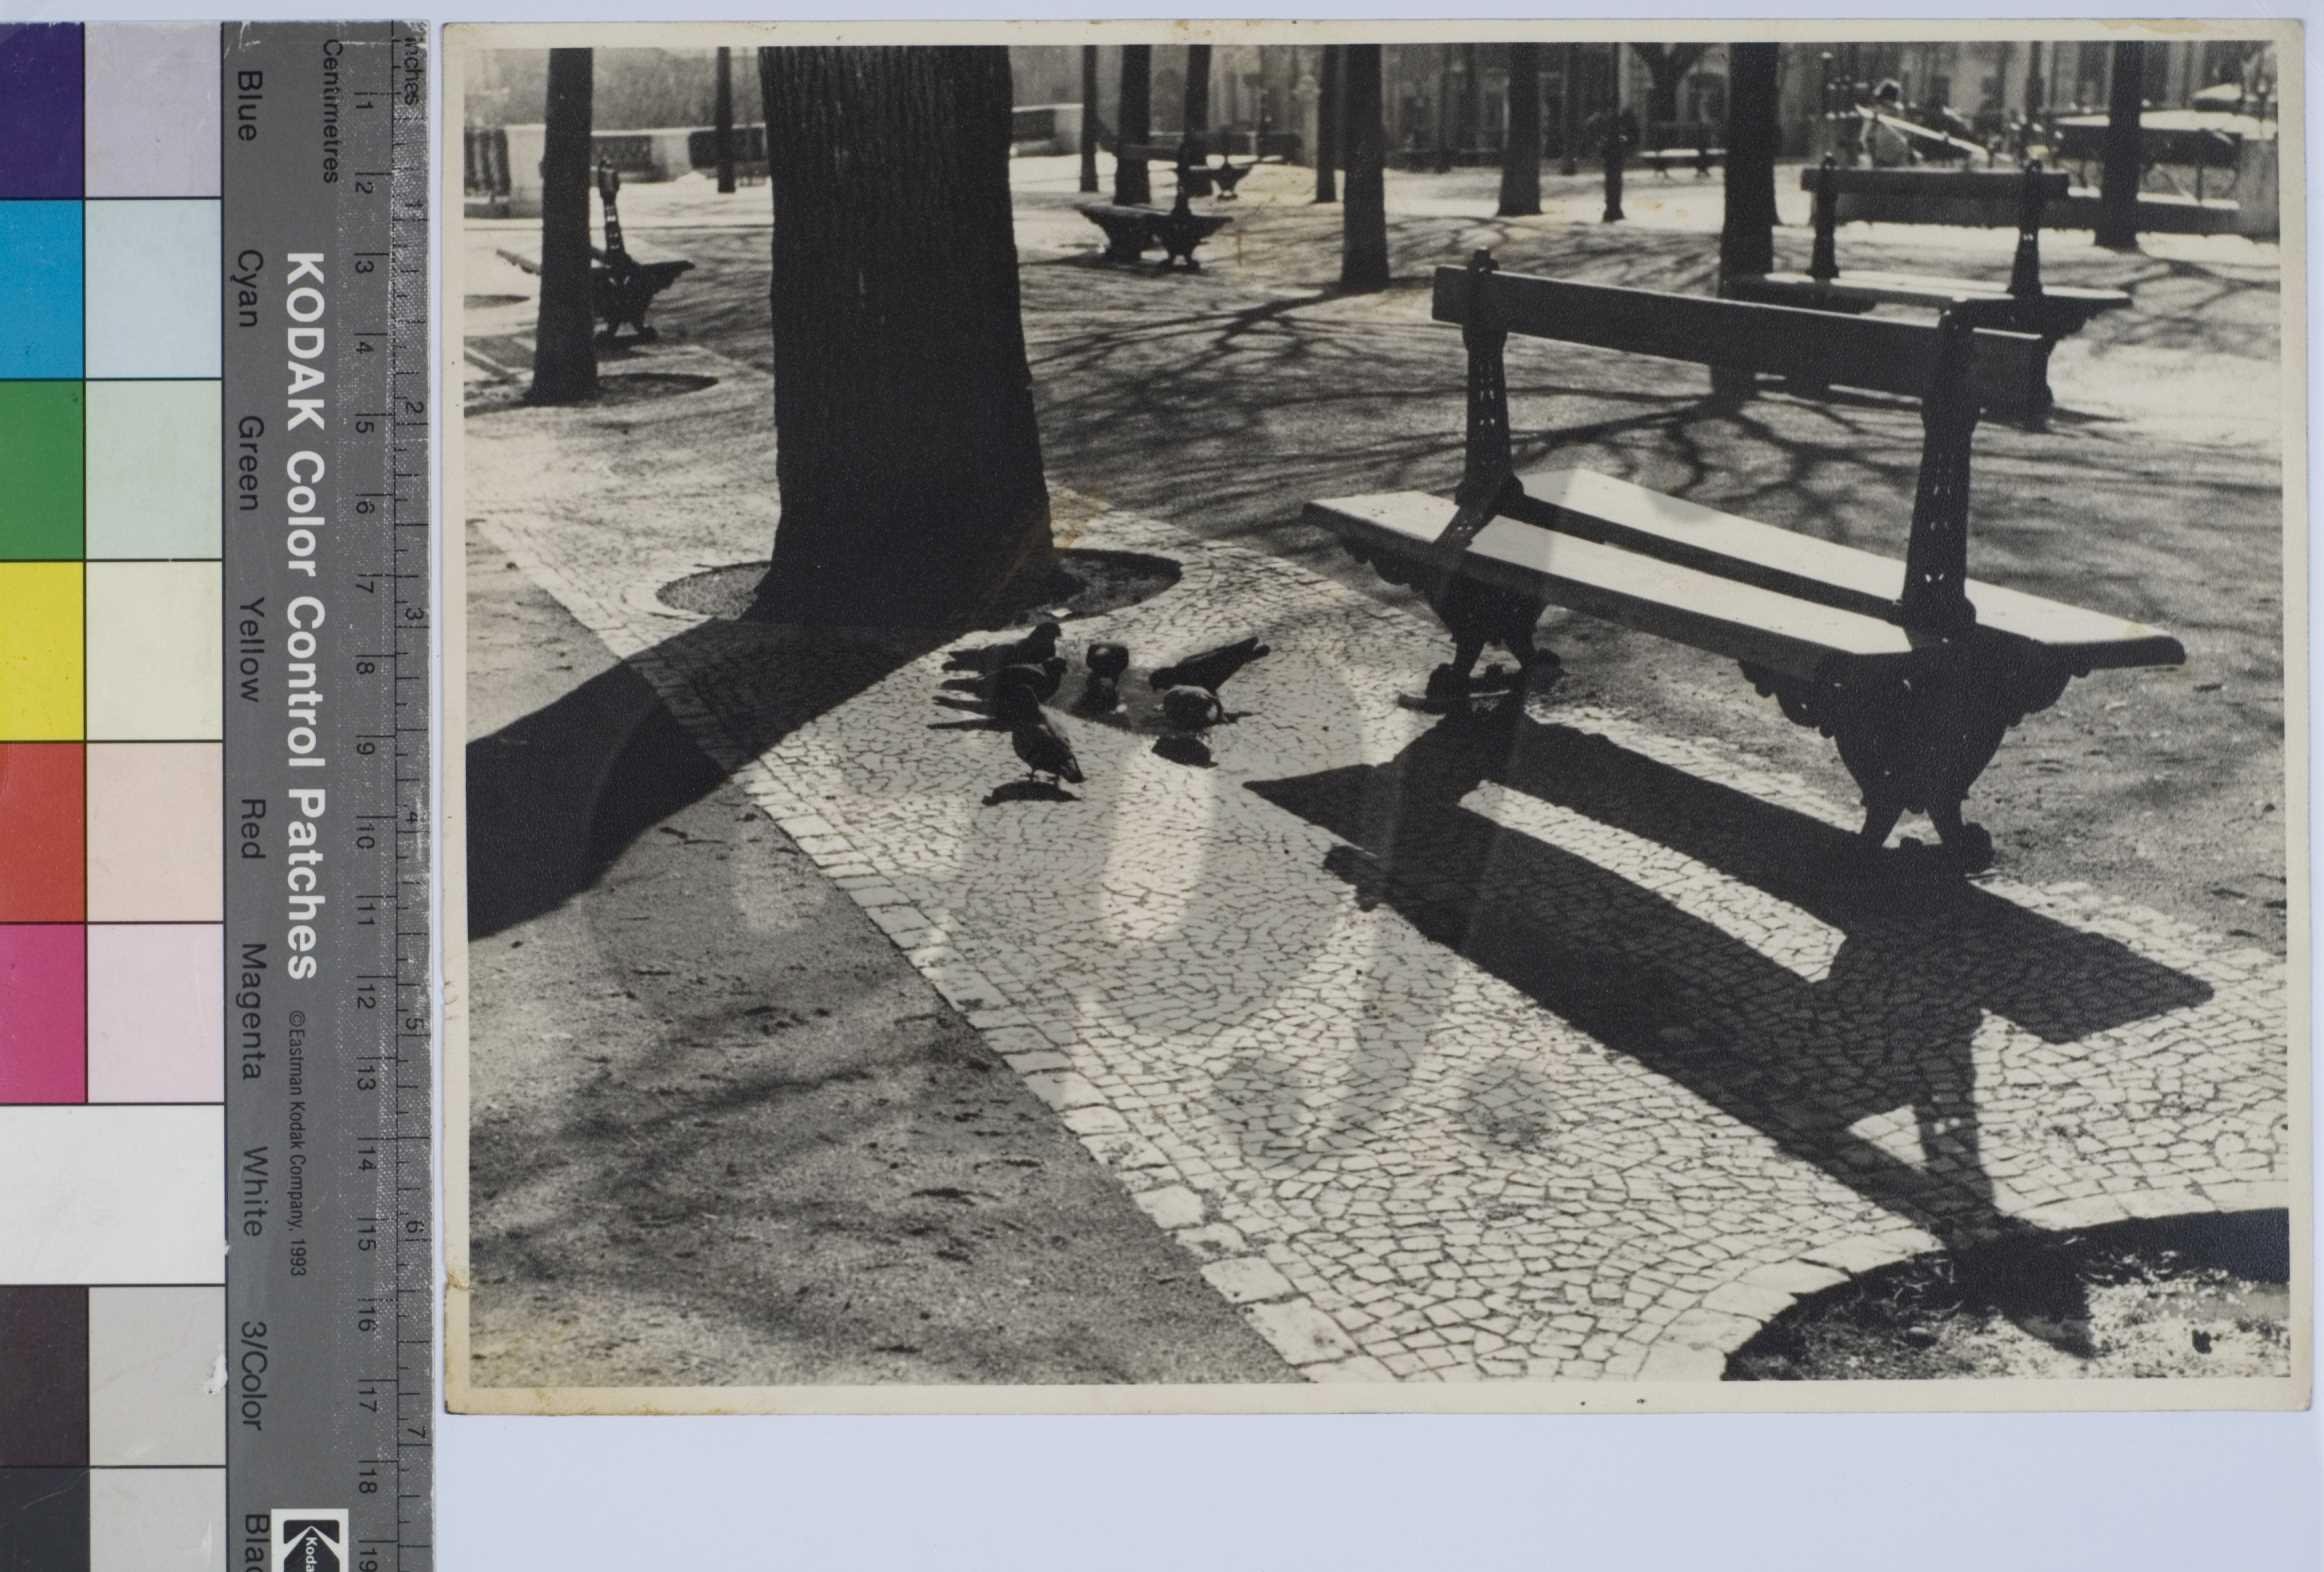 Centro Português de Fotografia, “Sol d’inverno” (1944)